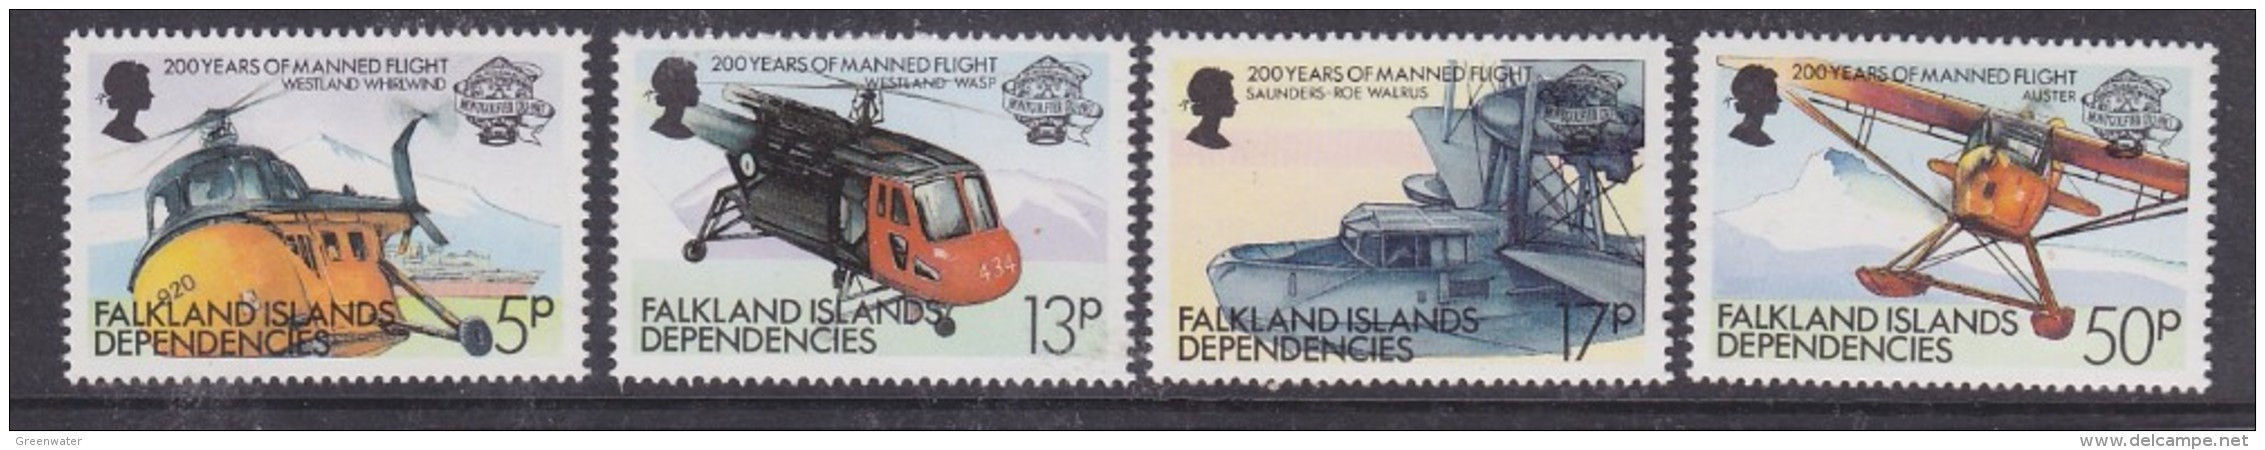 Falkland Islands Dependencies (FID) 1983 Bicentenary Of Manned Flight 4v ** Mnh (59843A) - South Georgia